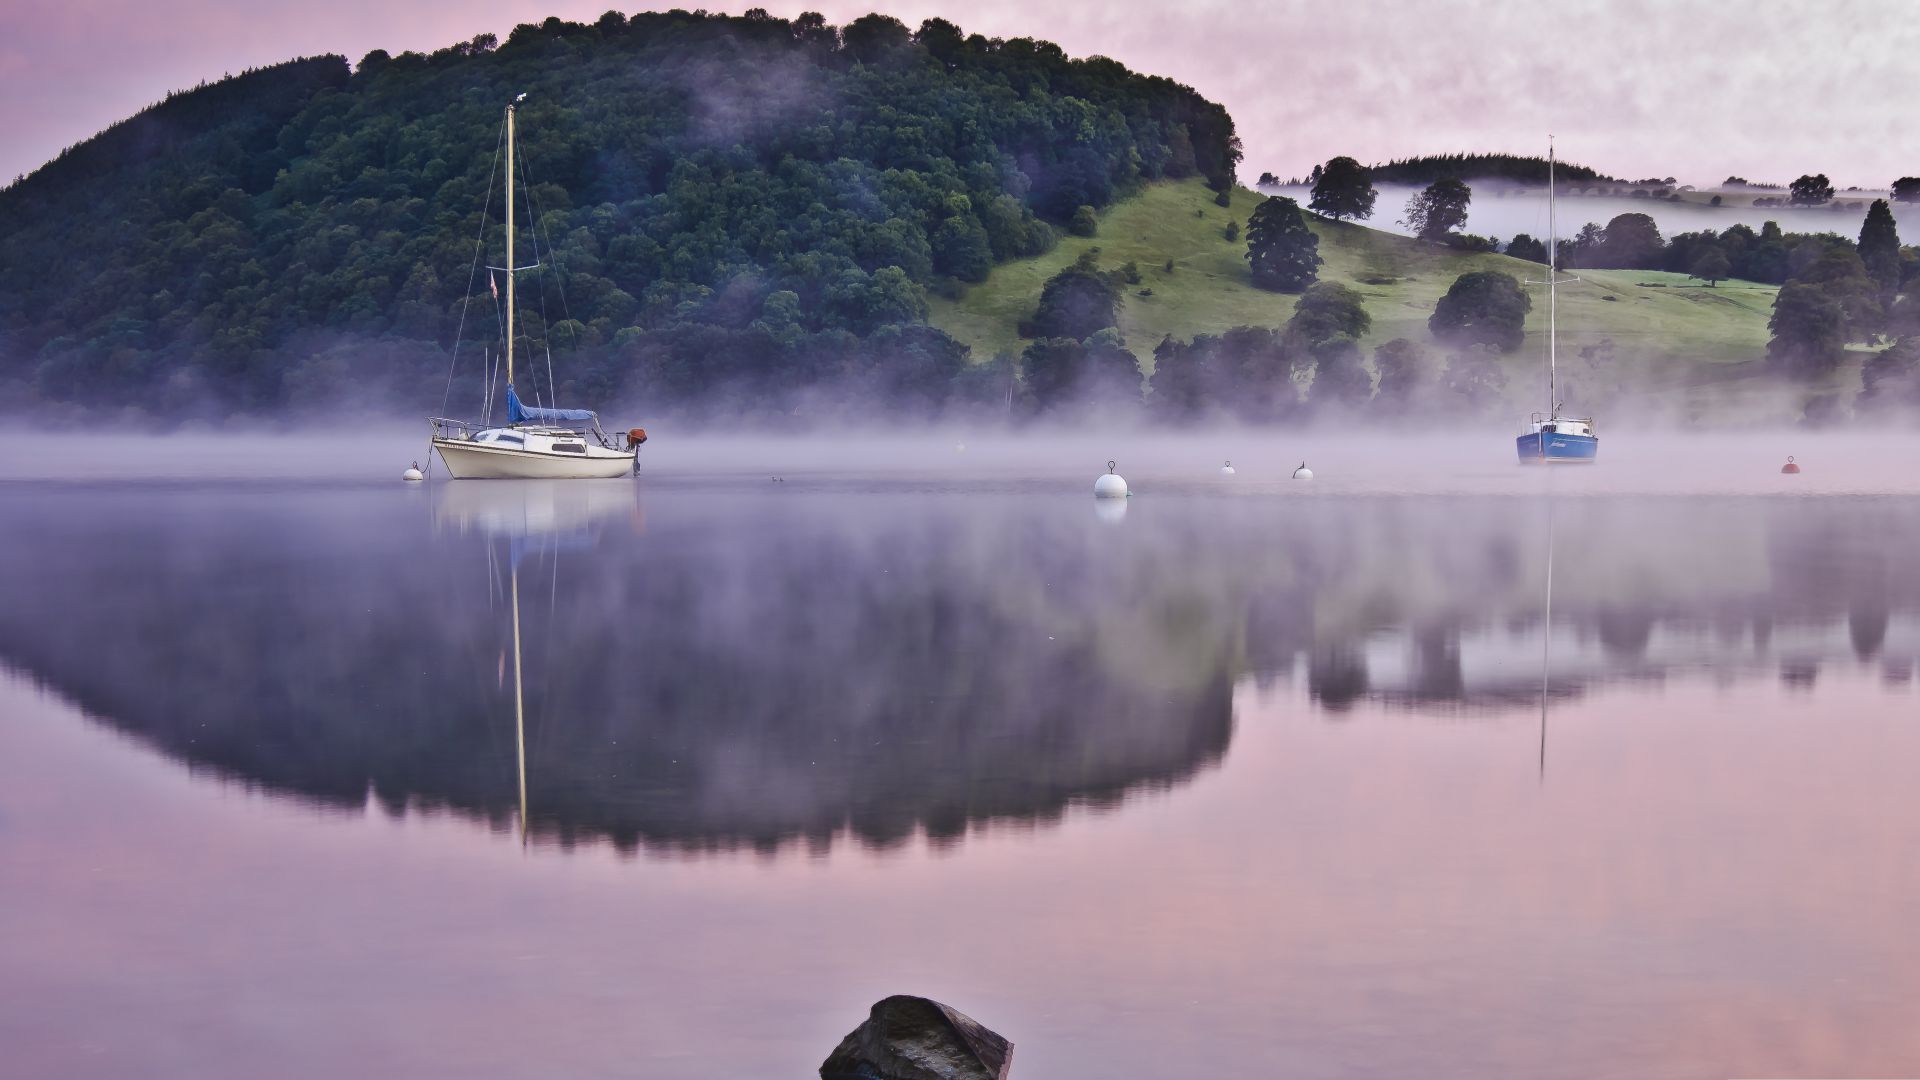 Lake, 4k, 5k wallpaper, fog, hills, boat, reflection (horizontal)